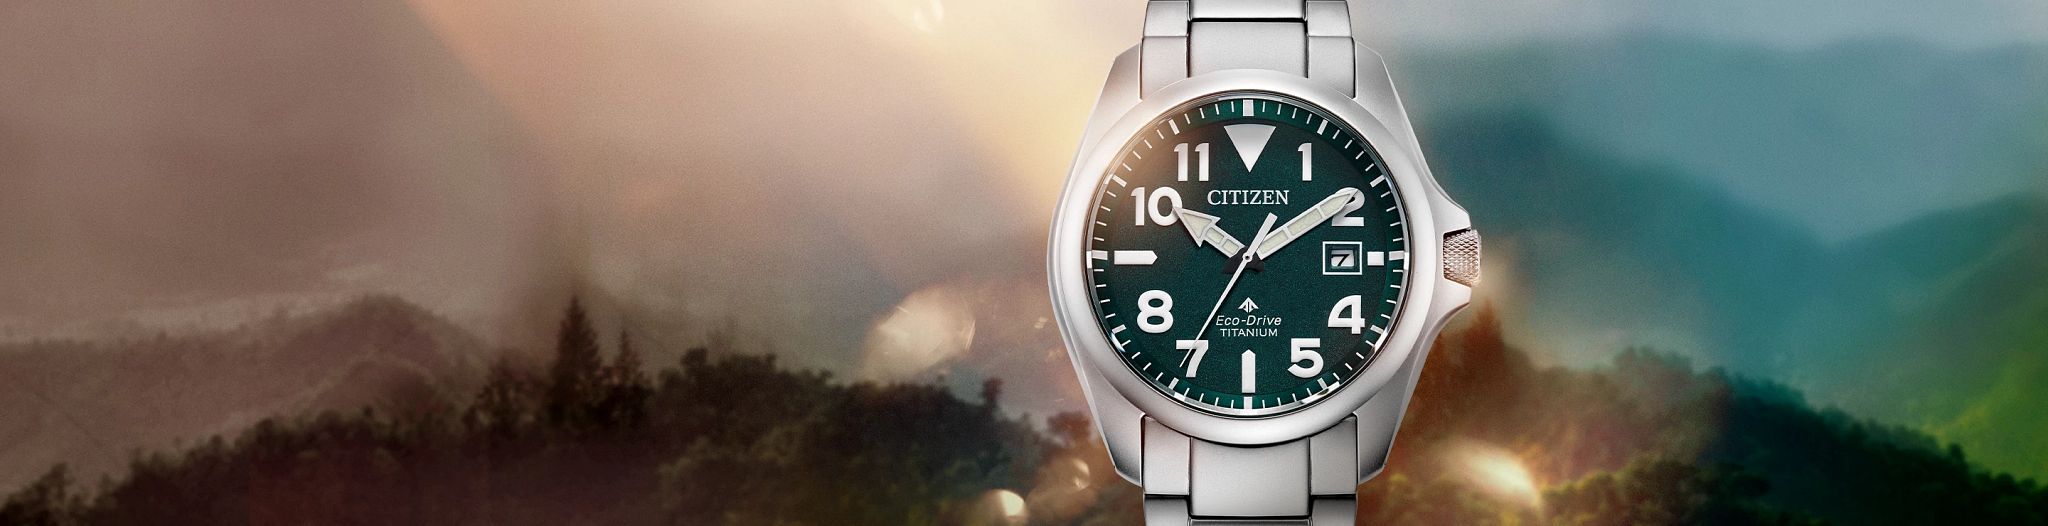 Citizen Promaster Land Sports Watches, Altichron Outdoor Watches